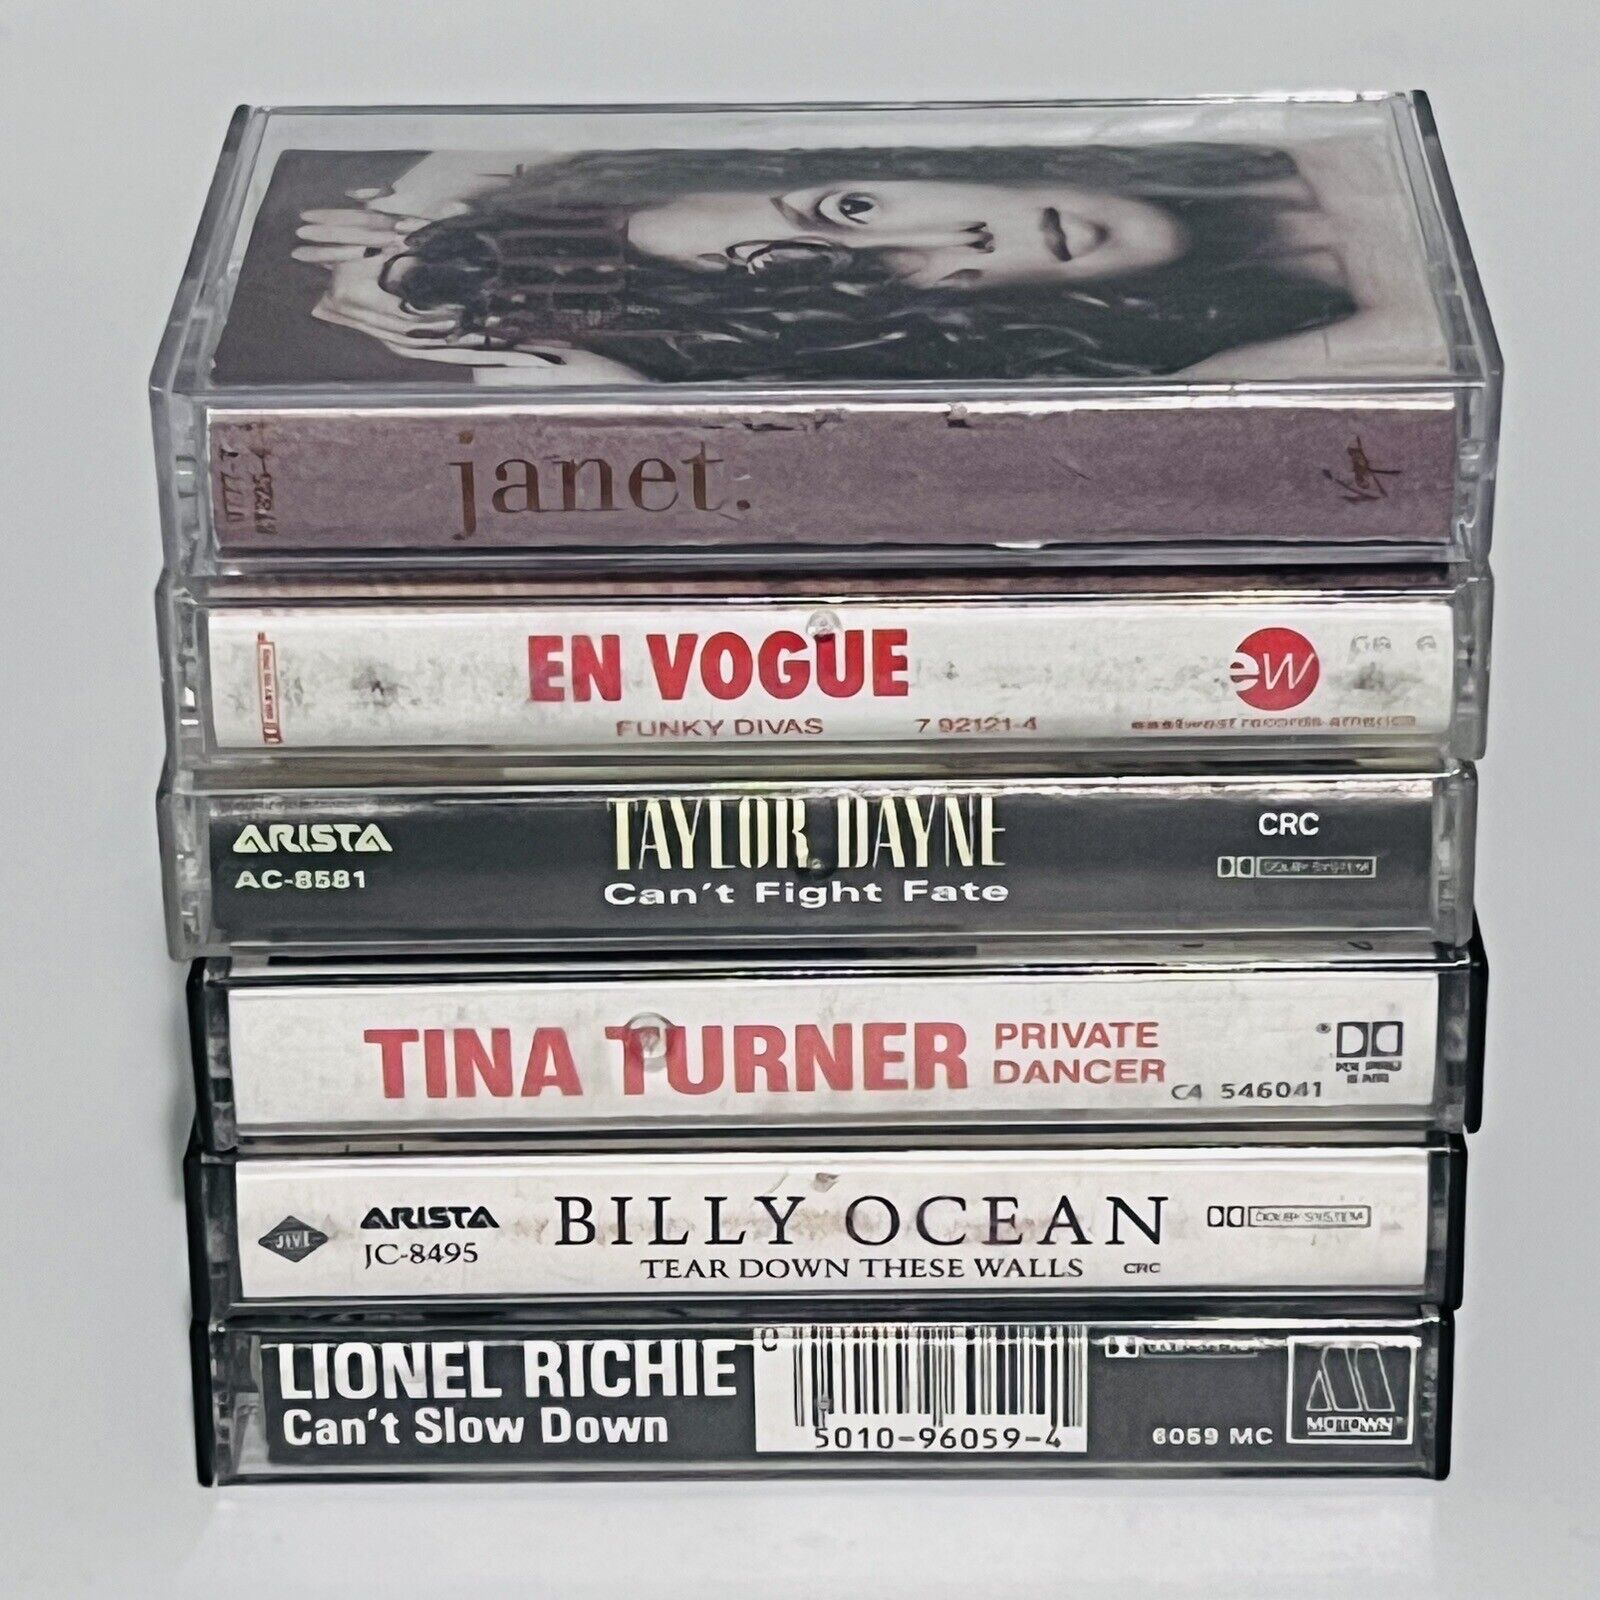 Lot of 6 Cassettes Mixed Artists Lionel Richie Tina Turner Taylor Dayne En Vogue